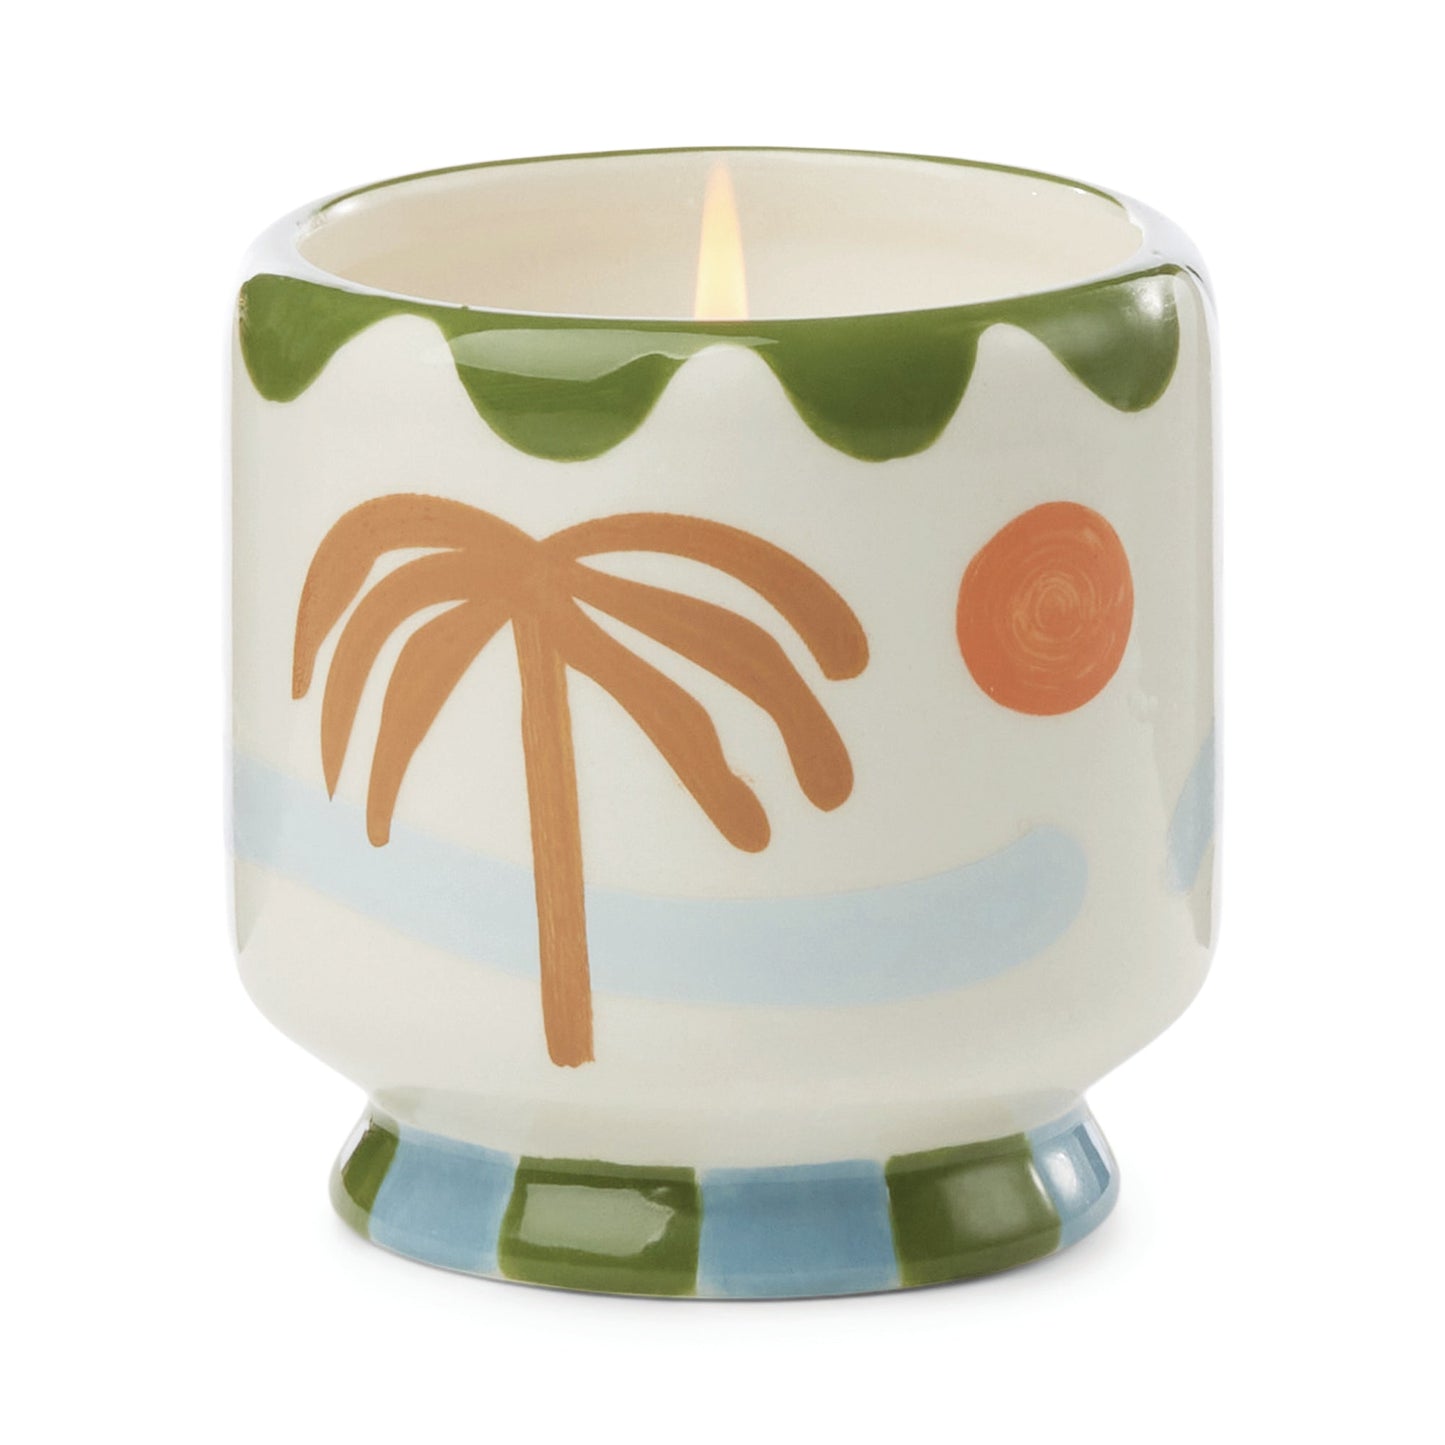 Adopo 8 oz./226g Palm Tree Ceramic Candle - Lush Palms